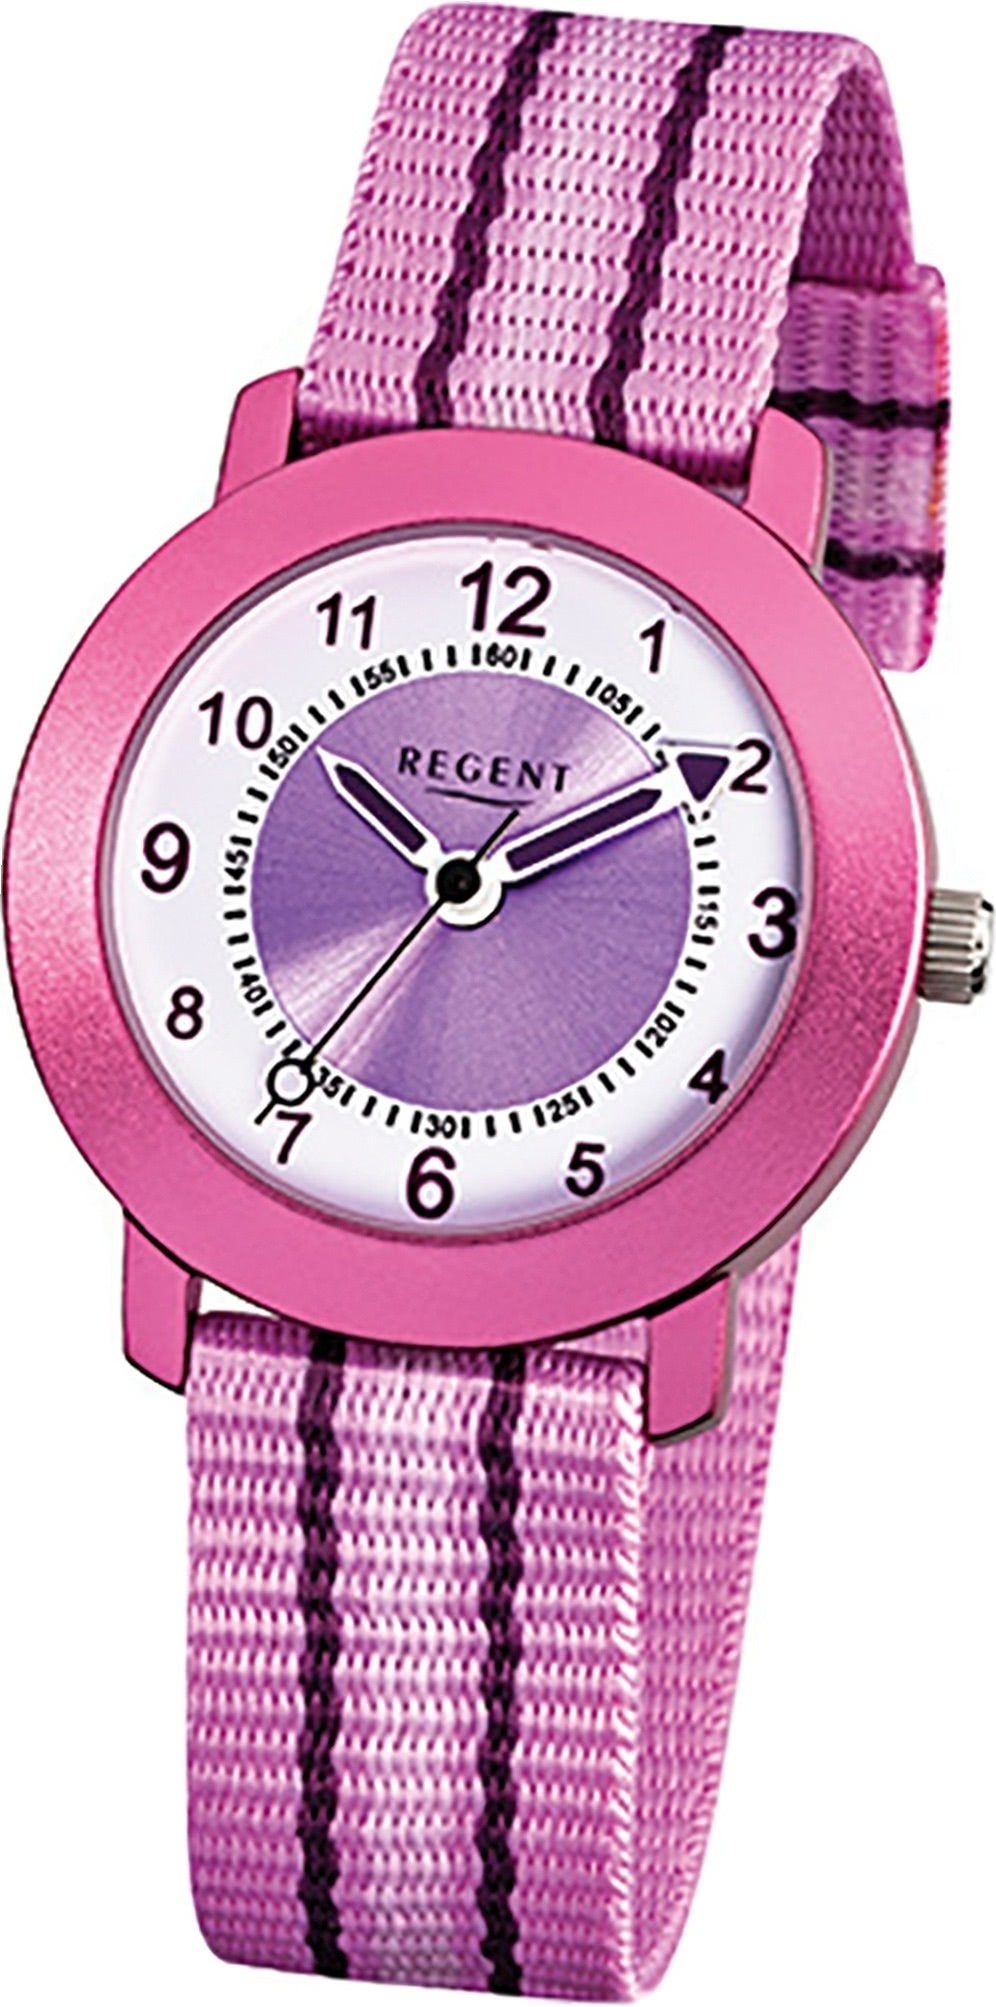 Kinder Regent F-725 Textilarmband rosa, rundes (ca. klein 30mm) Gehäuse, Textil Uhr Regent Kinderuhr Quarzuhr Quarzuhr,